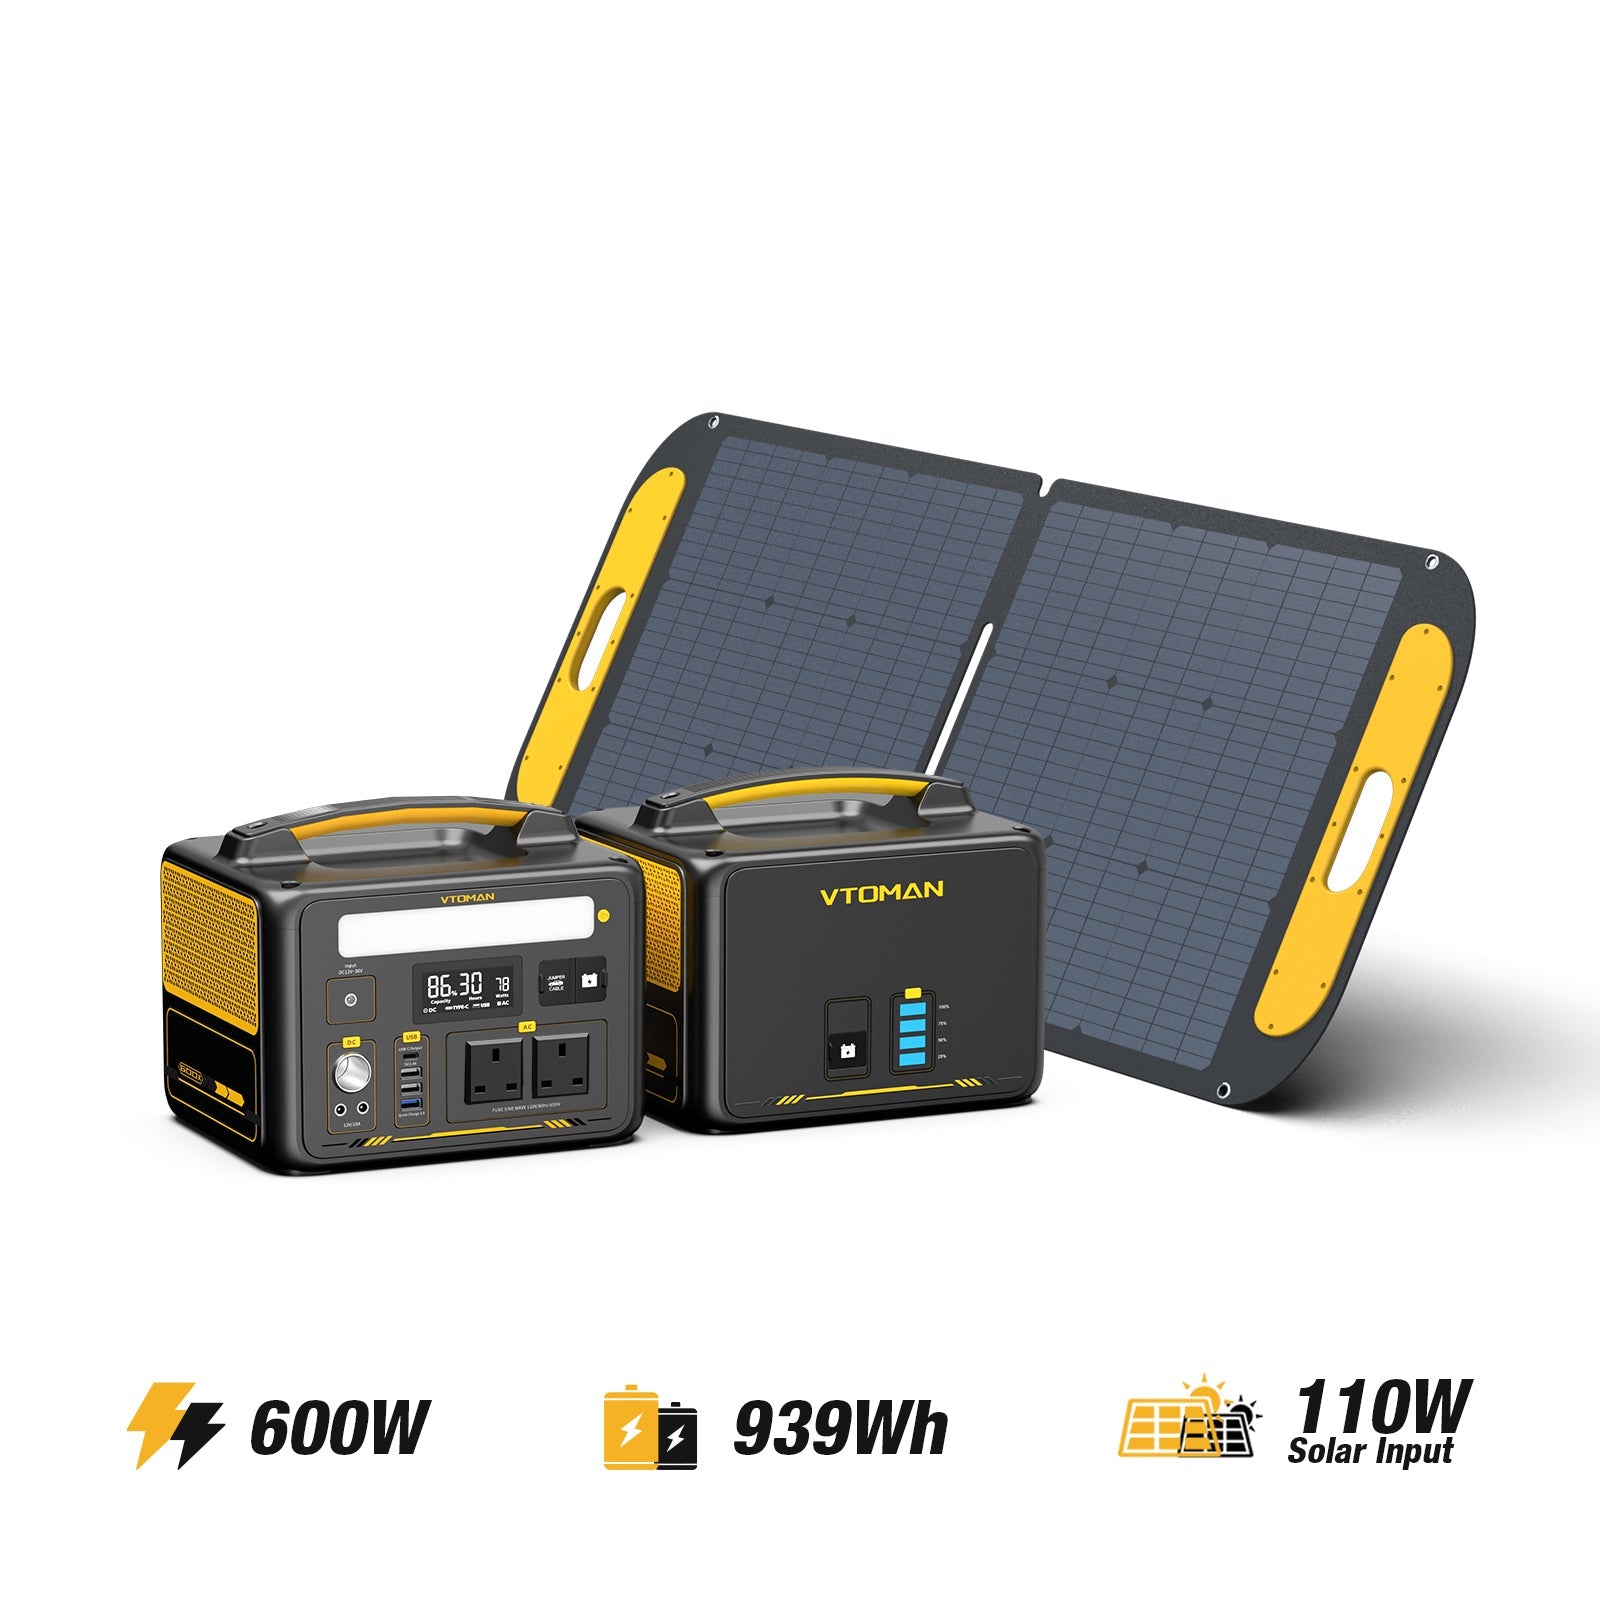 Jump 600W/939Wh 110W Solar Generator